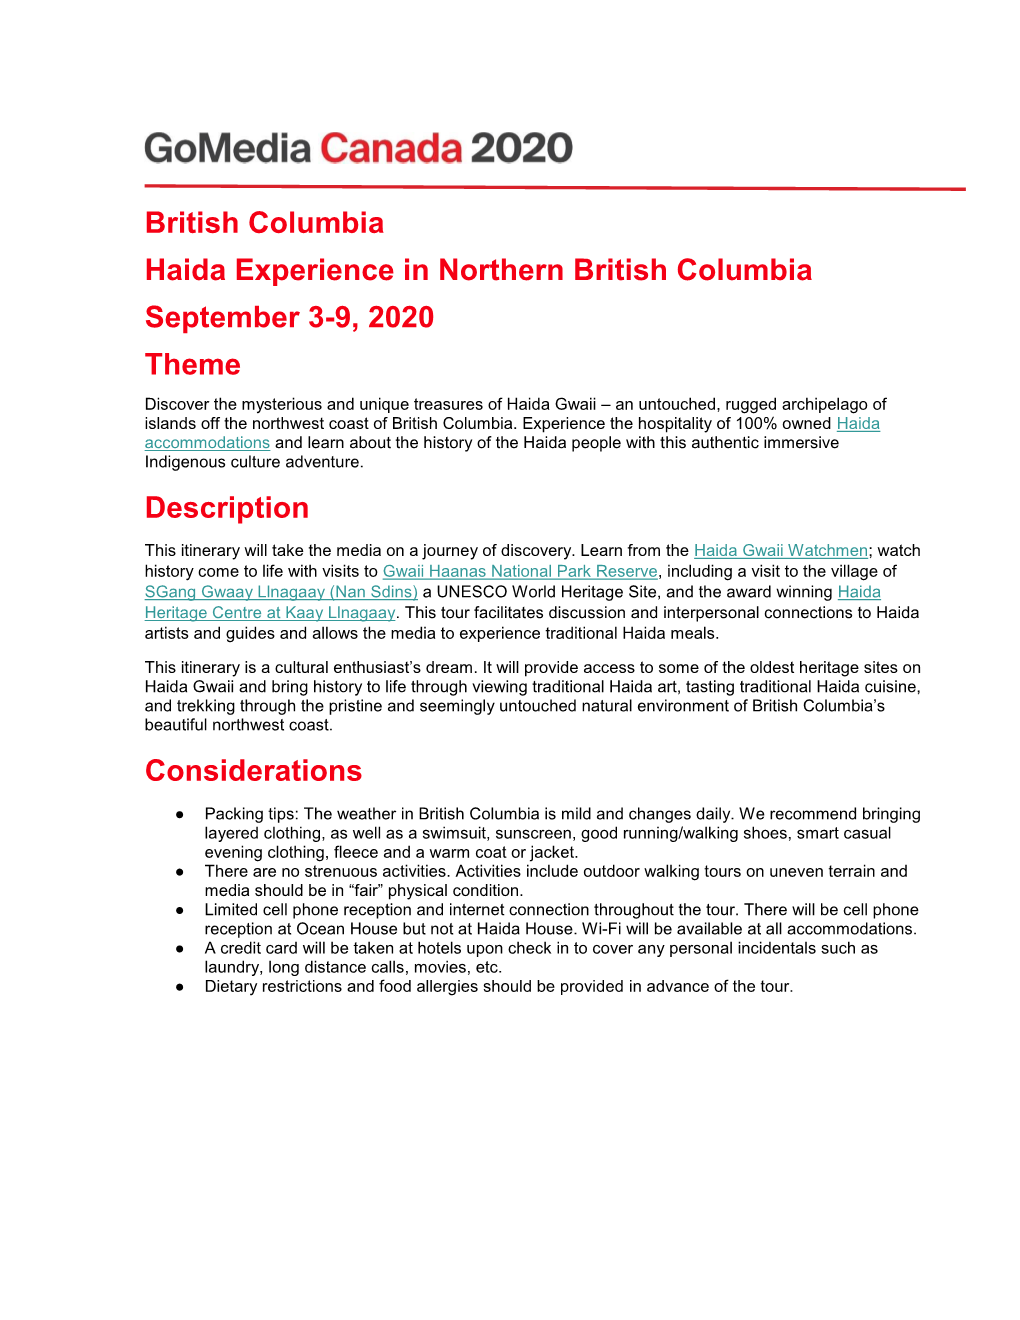 British Columbia Haida Experience in Northern British Columbia